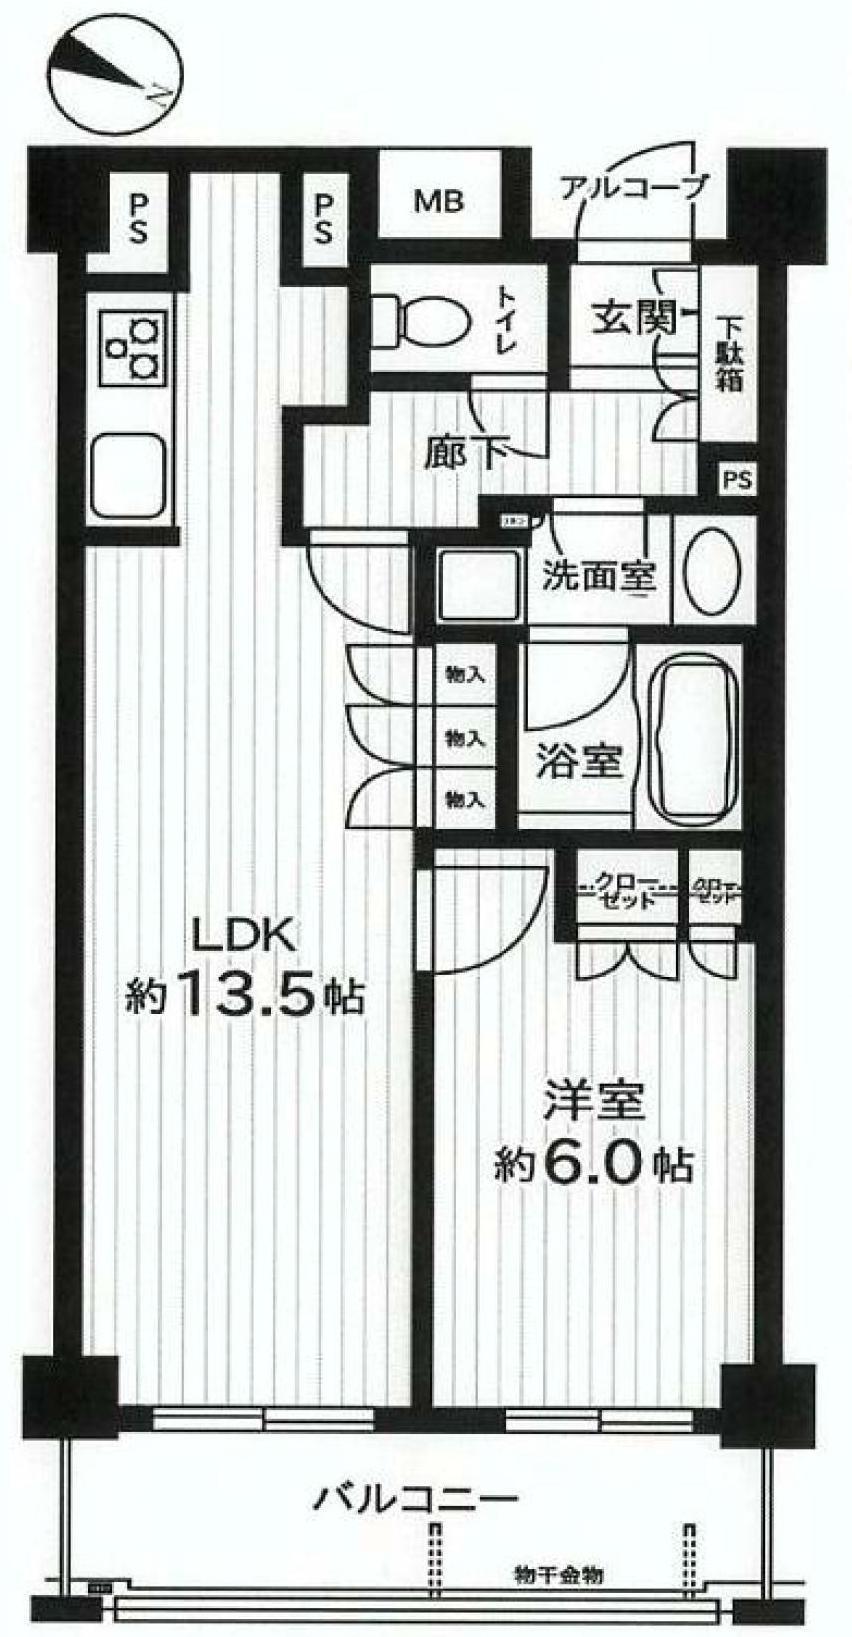 Floor plan. 1LDK, Price 36,800,000 yen, Footprint 46.7 sq m , Balcony area 7.37 sq m